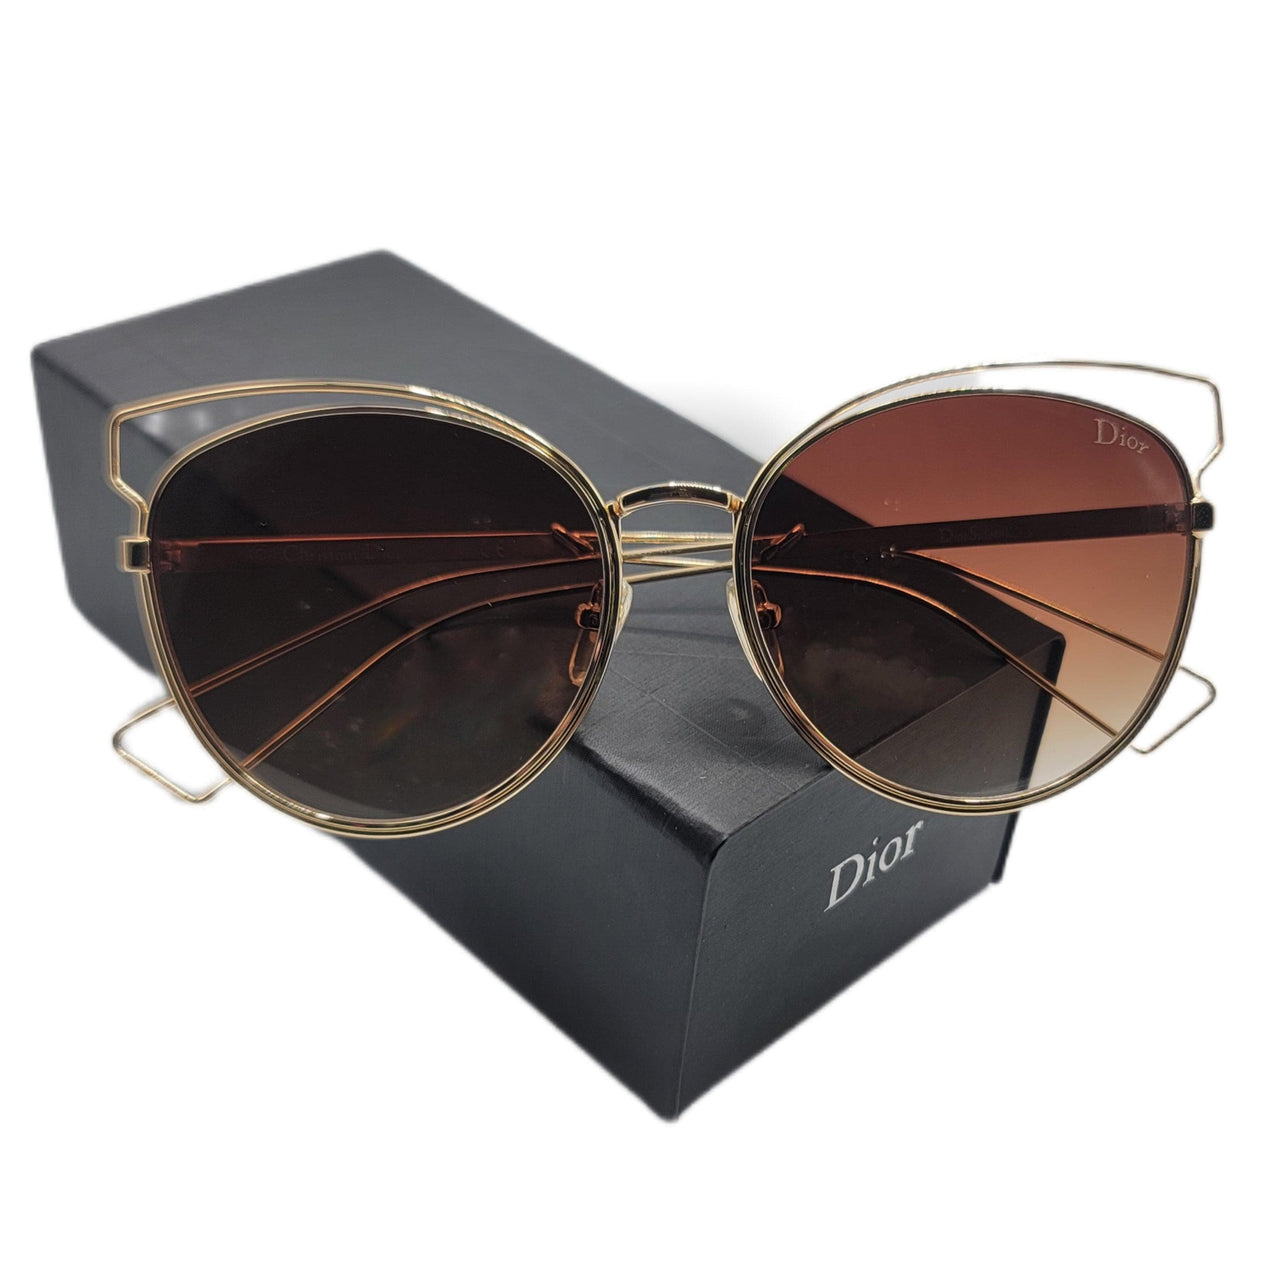 The Bag Couture Sunglasses Christian Dior Sunglasses Gold